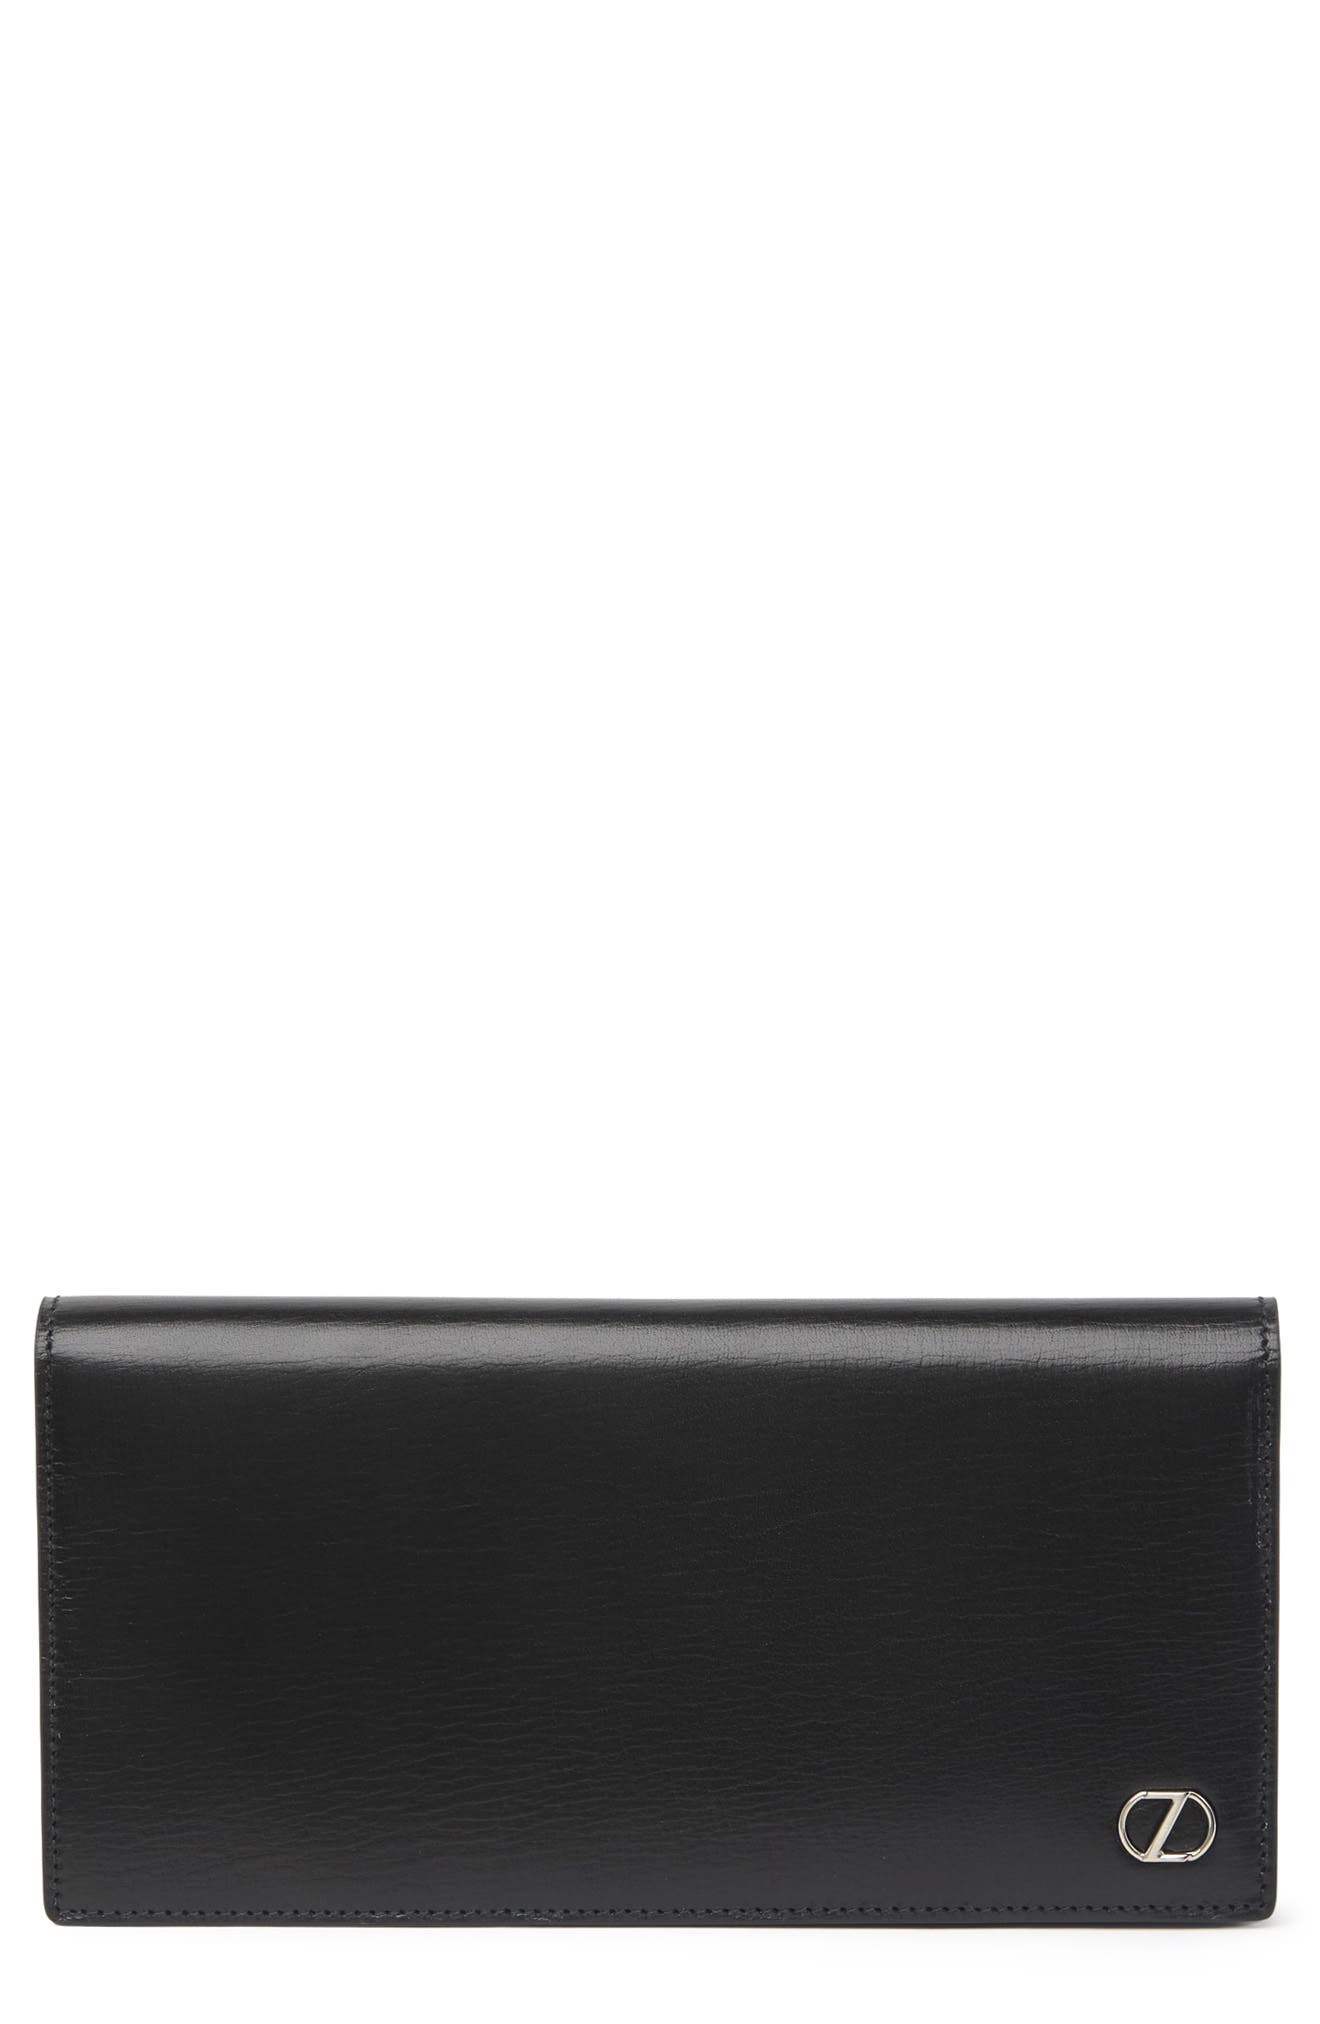 Ermenegildo Zegna Leather Continental Wallet In Black